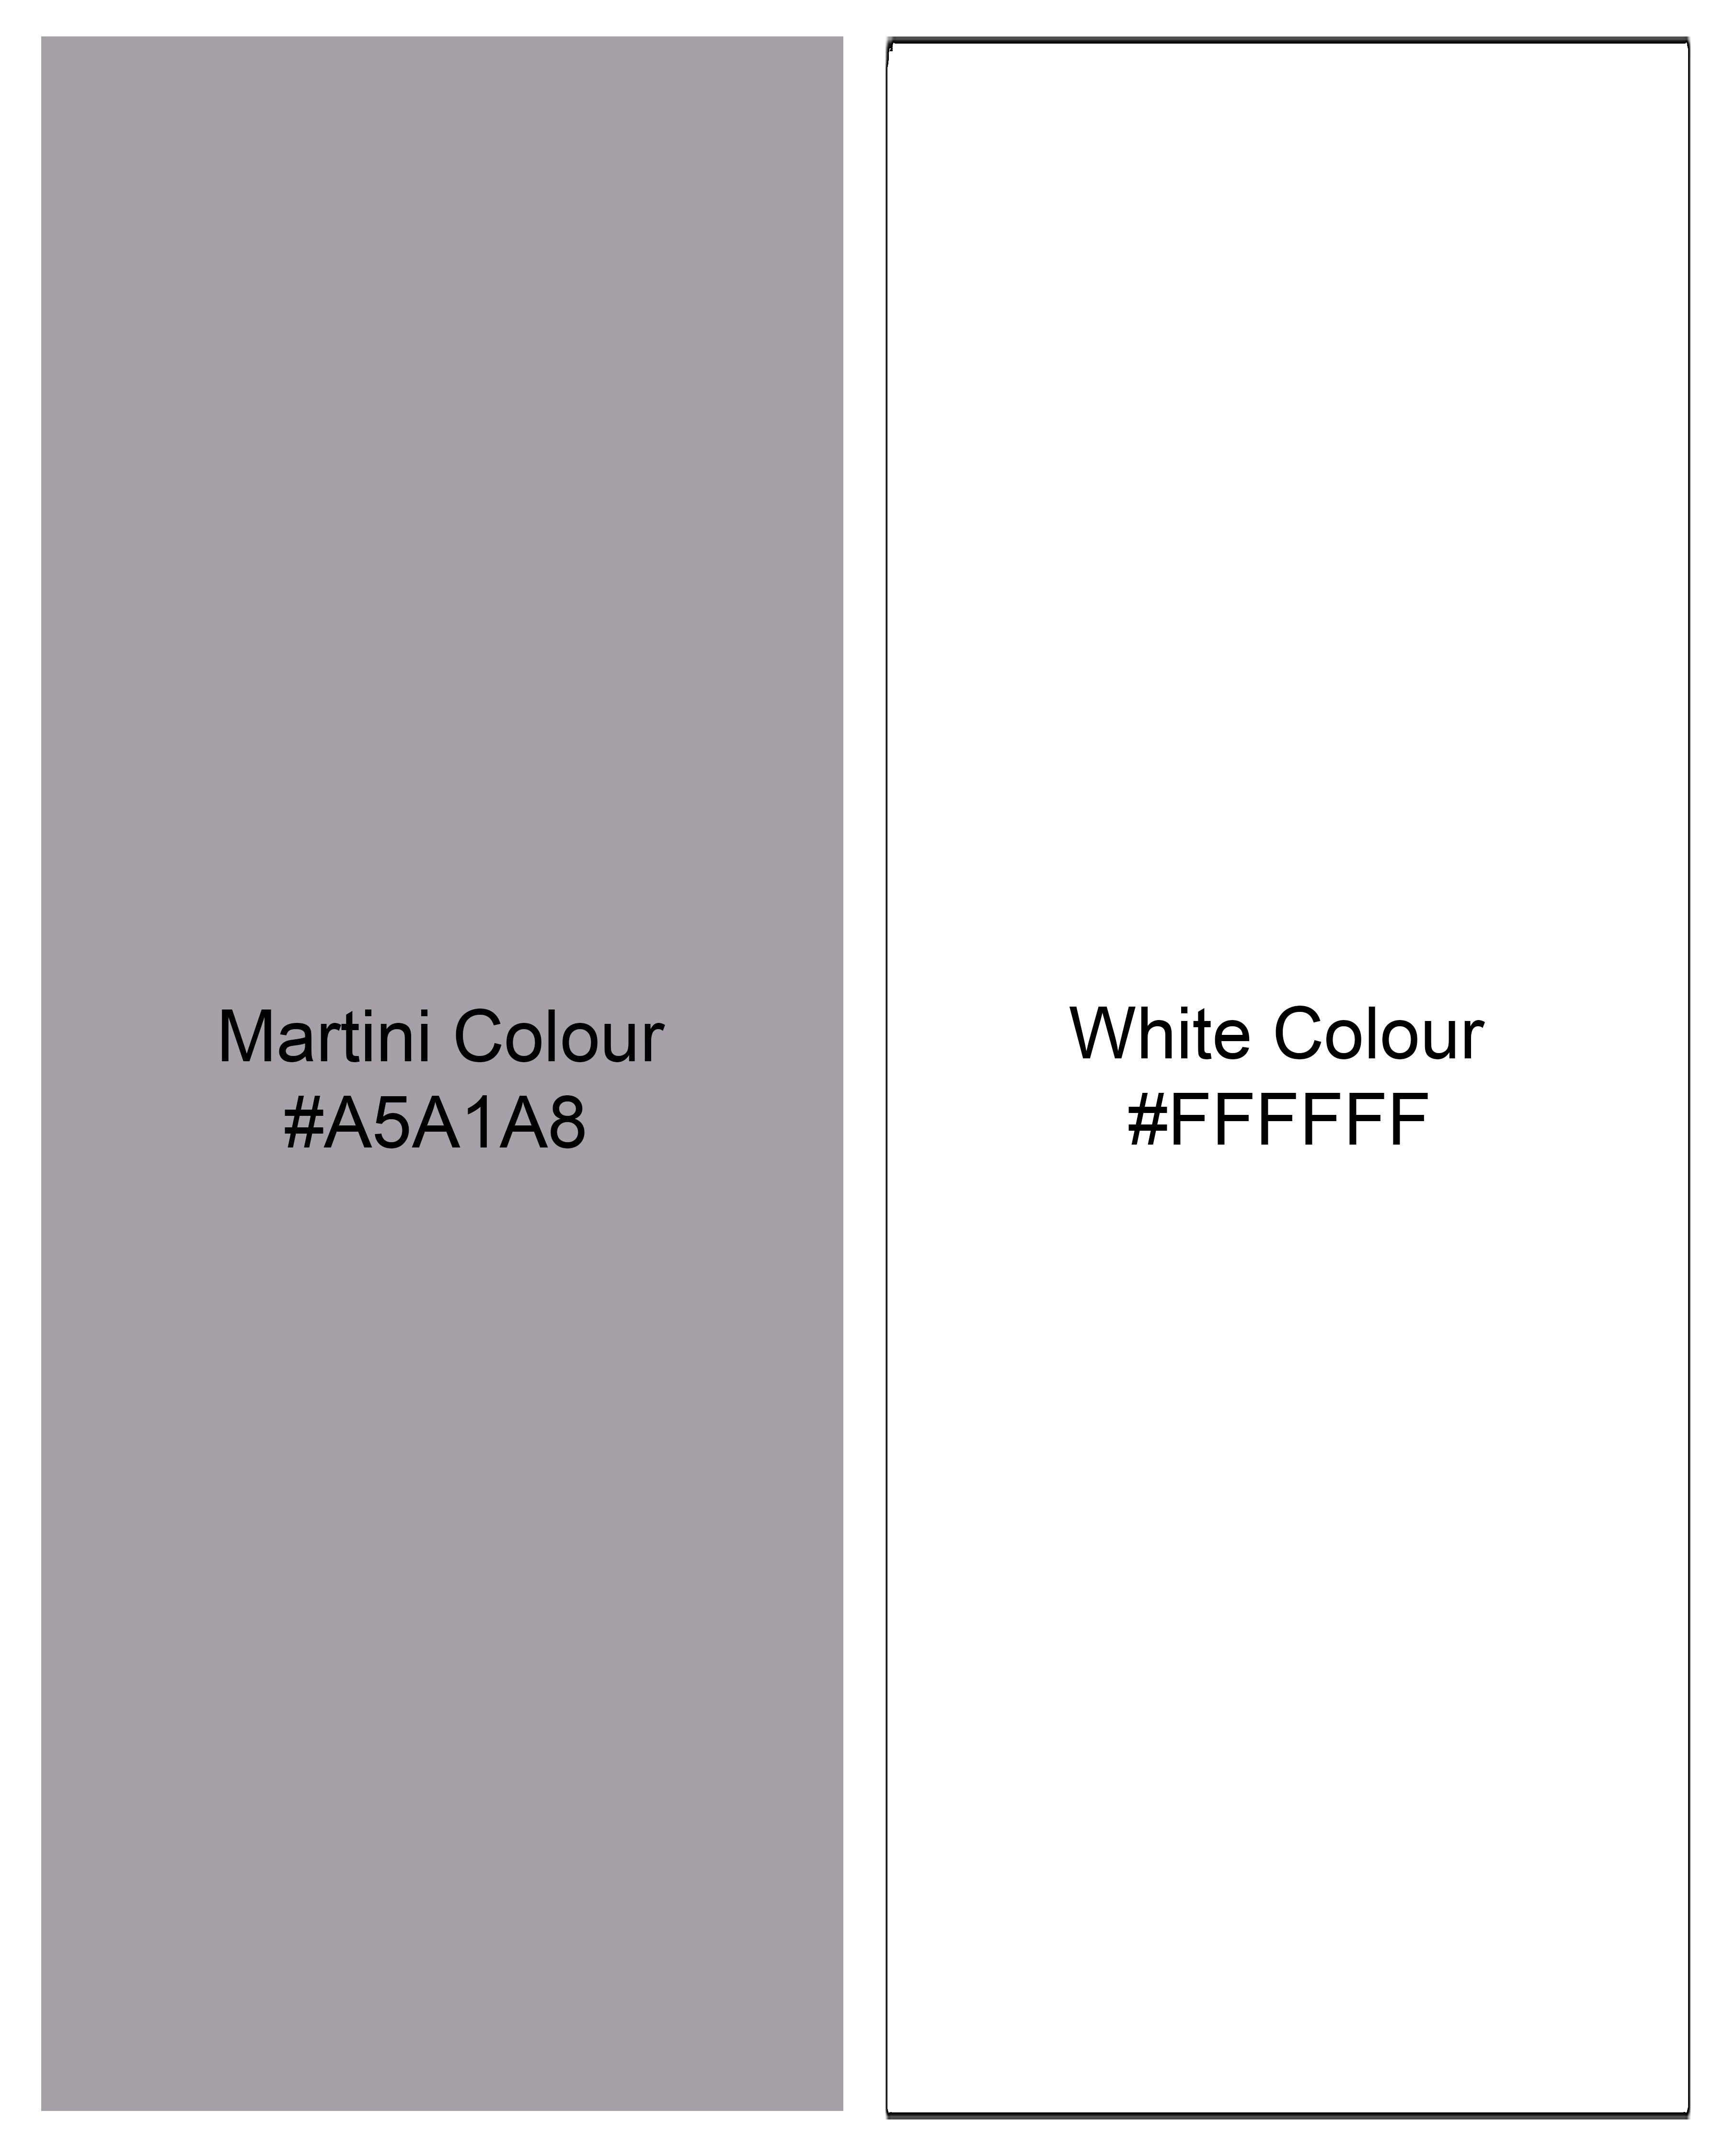 Martini Grey and White Pinstriped Premium Cotton Designer Shirt 8483-P250-38,8483-P250-H-38,8483-P250-389,8483-P250-389,8483-P250-40,8483-P250-H-40,8483-P250-402,8483-P250-402,8483-P250-404,8483-P250-404,8483-P250-406,8483-P250-406,8483-P250-408,8483-P250-408,8483-P250-50,8483-P250-H-50,8483-P250-502,8483-P250-502